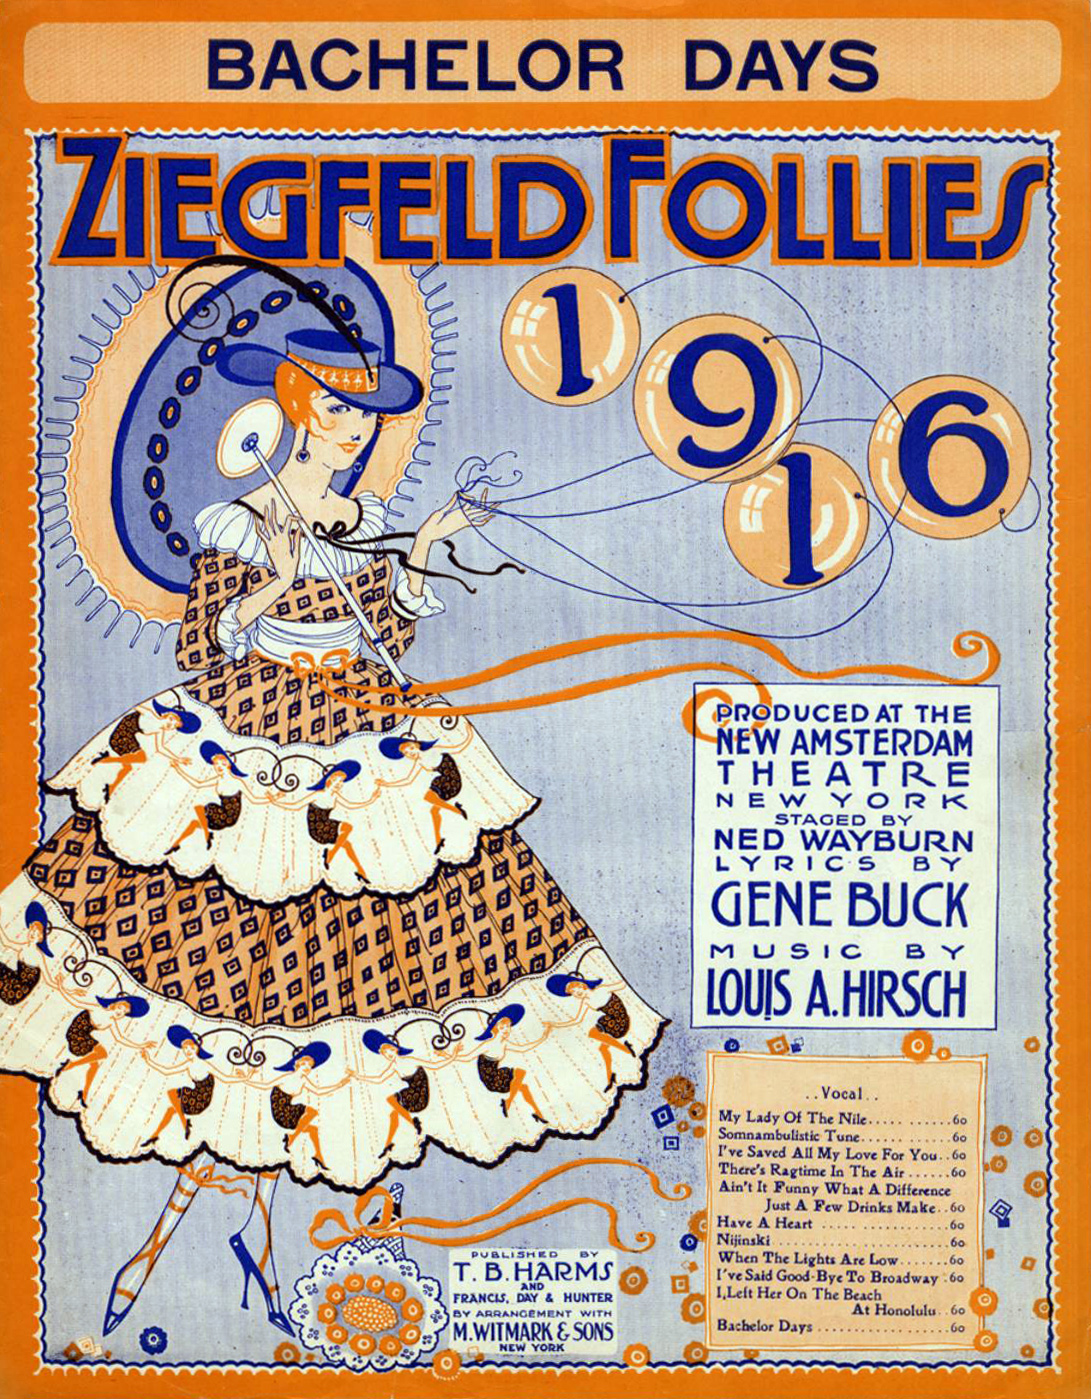 Ziegfeld Sheet Music - Ziegfeld Follies of 1916 (Bachelor Days)